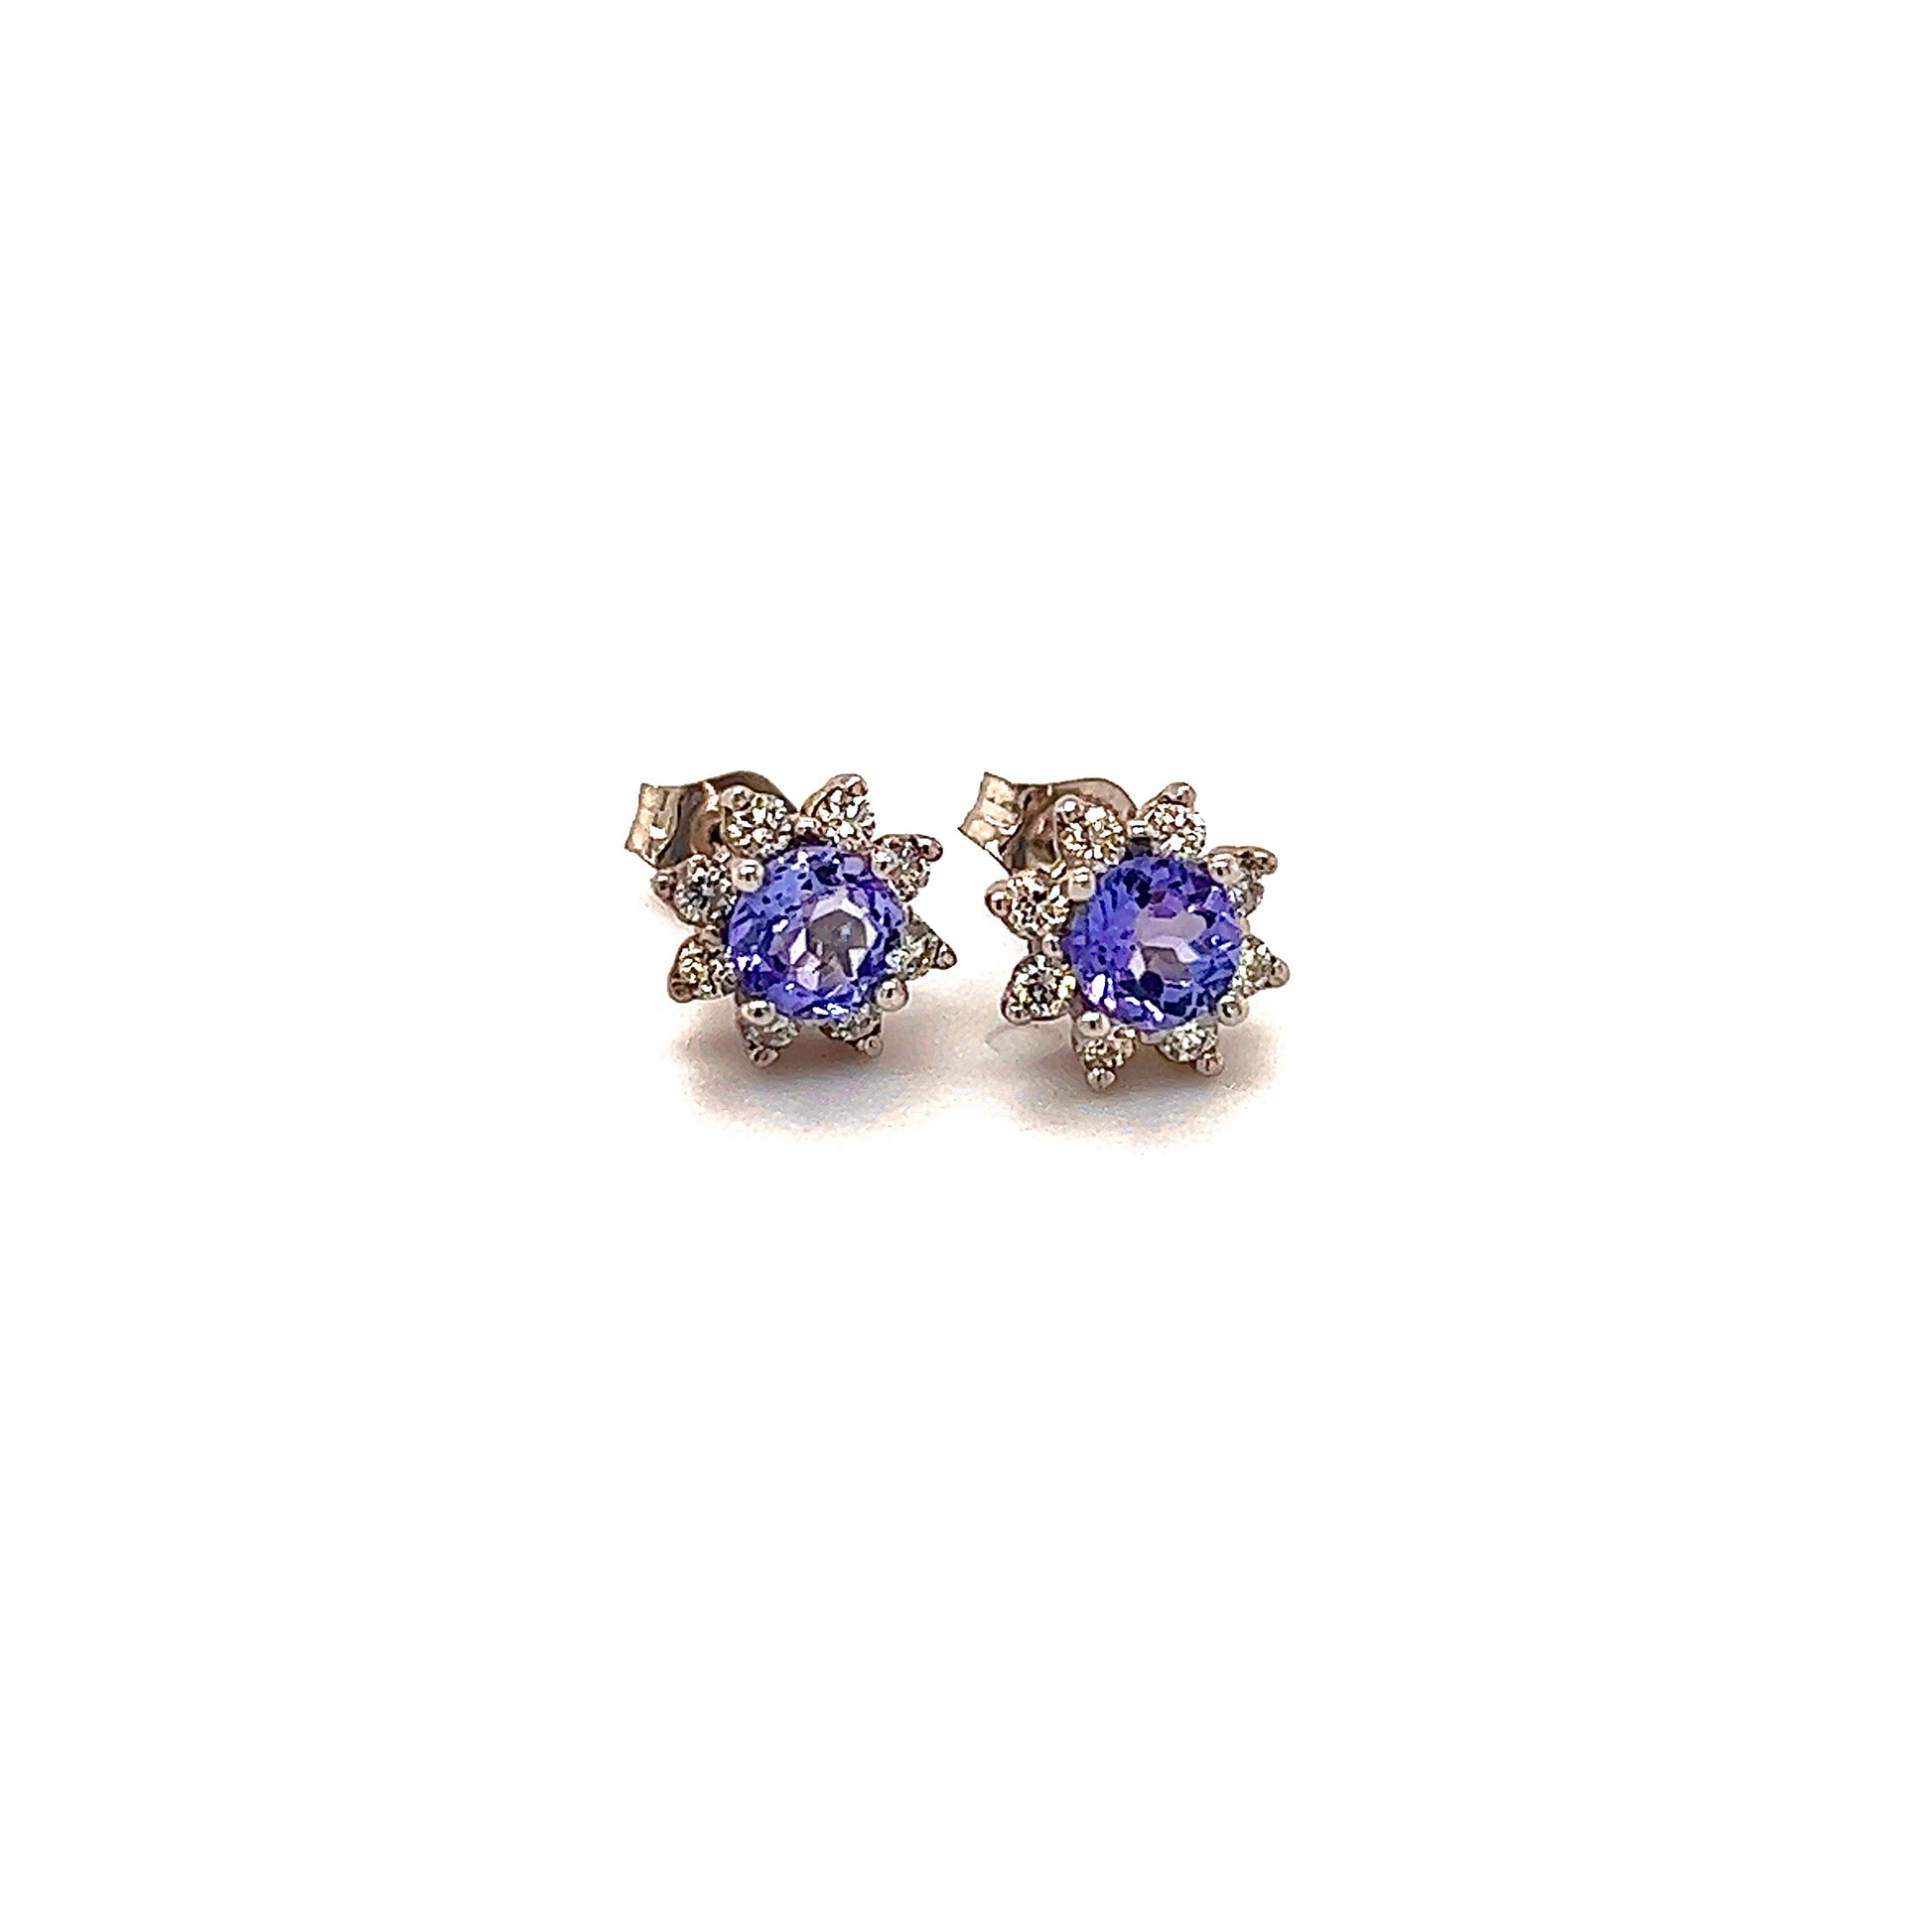 Natural Sapphire Diamond Halo Stud Earrings 14k WG 1.02 TCW Certified $3,950 121427